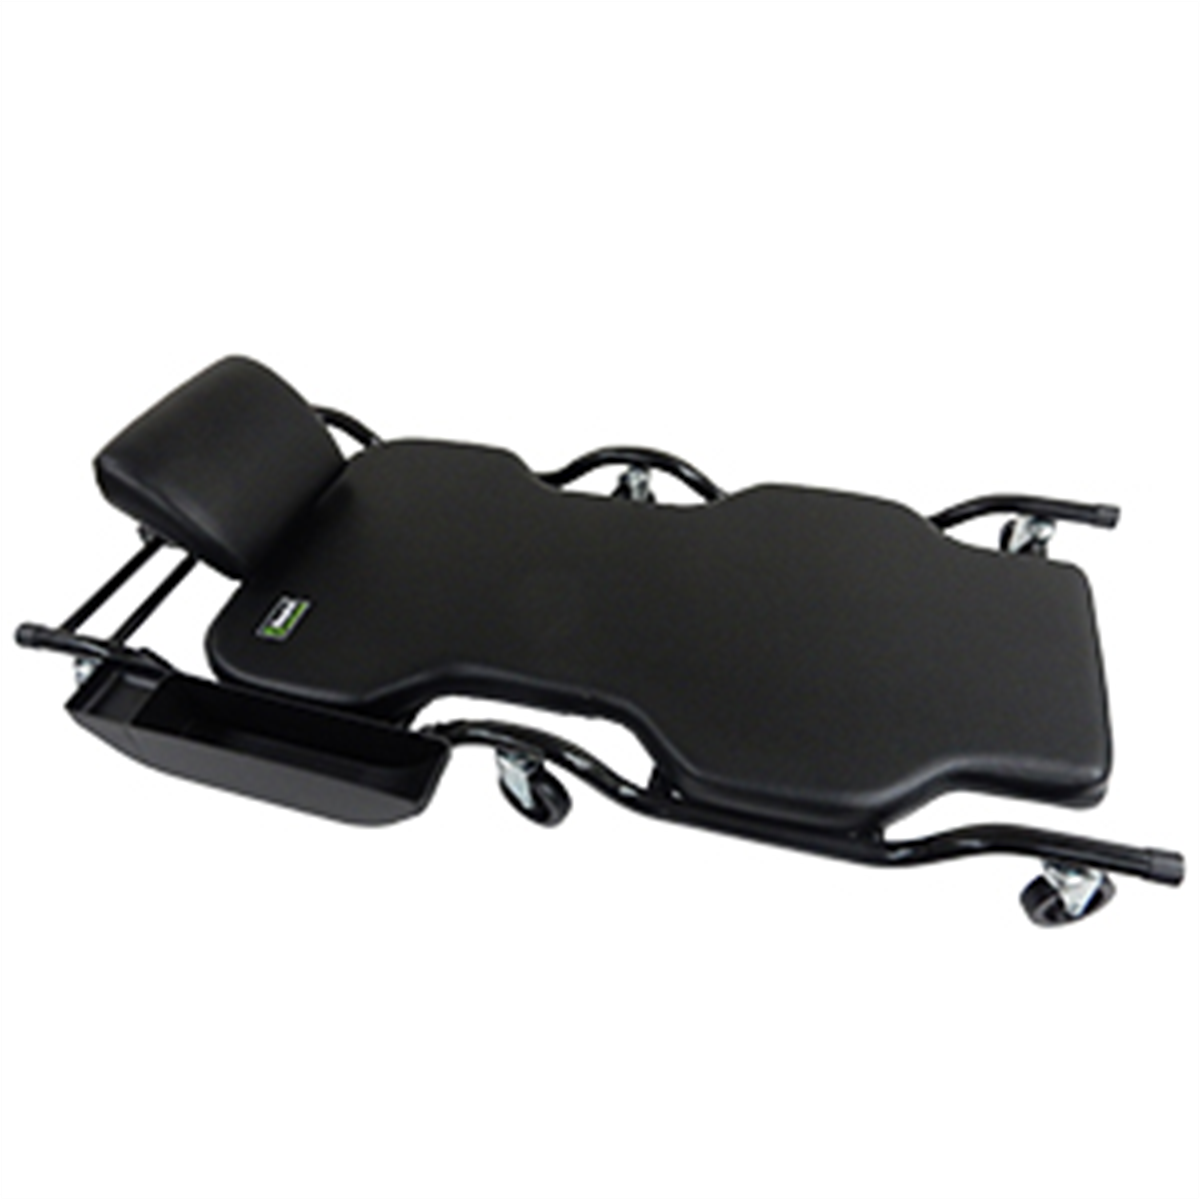 Creeper - 500 lbs capaciy w/ Adjustable Headrest, ...